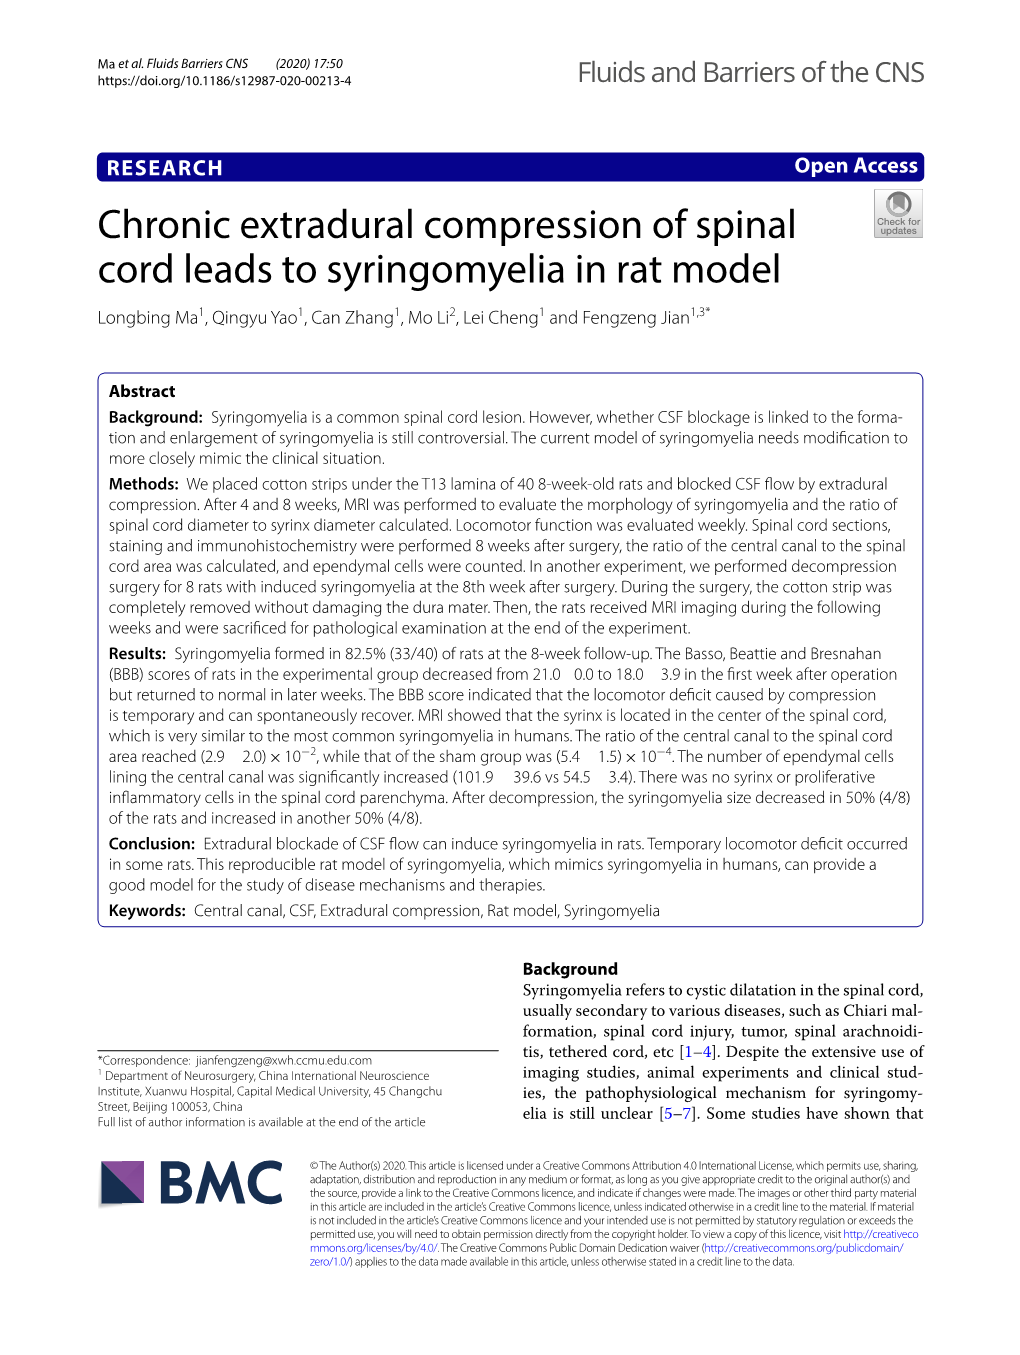 Chronic Extradural Compression of Spinal Cord Leads to Syringomyelia in Rat Model Longbing Ma1, Qingyu Yao1, Can Zhang1, Mo Li2, Lei Cheng1 and Fengzeng Jian1,3*